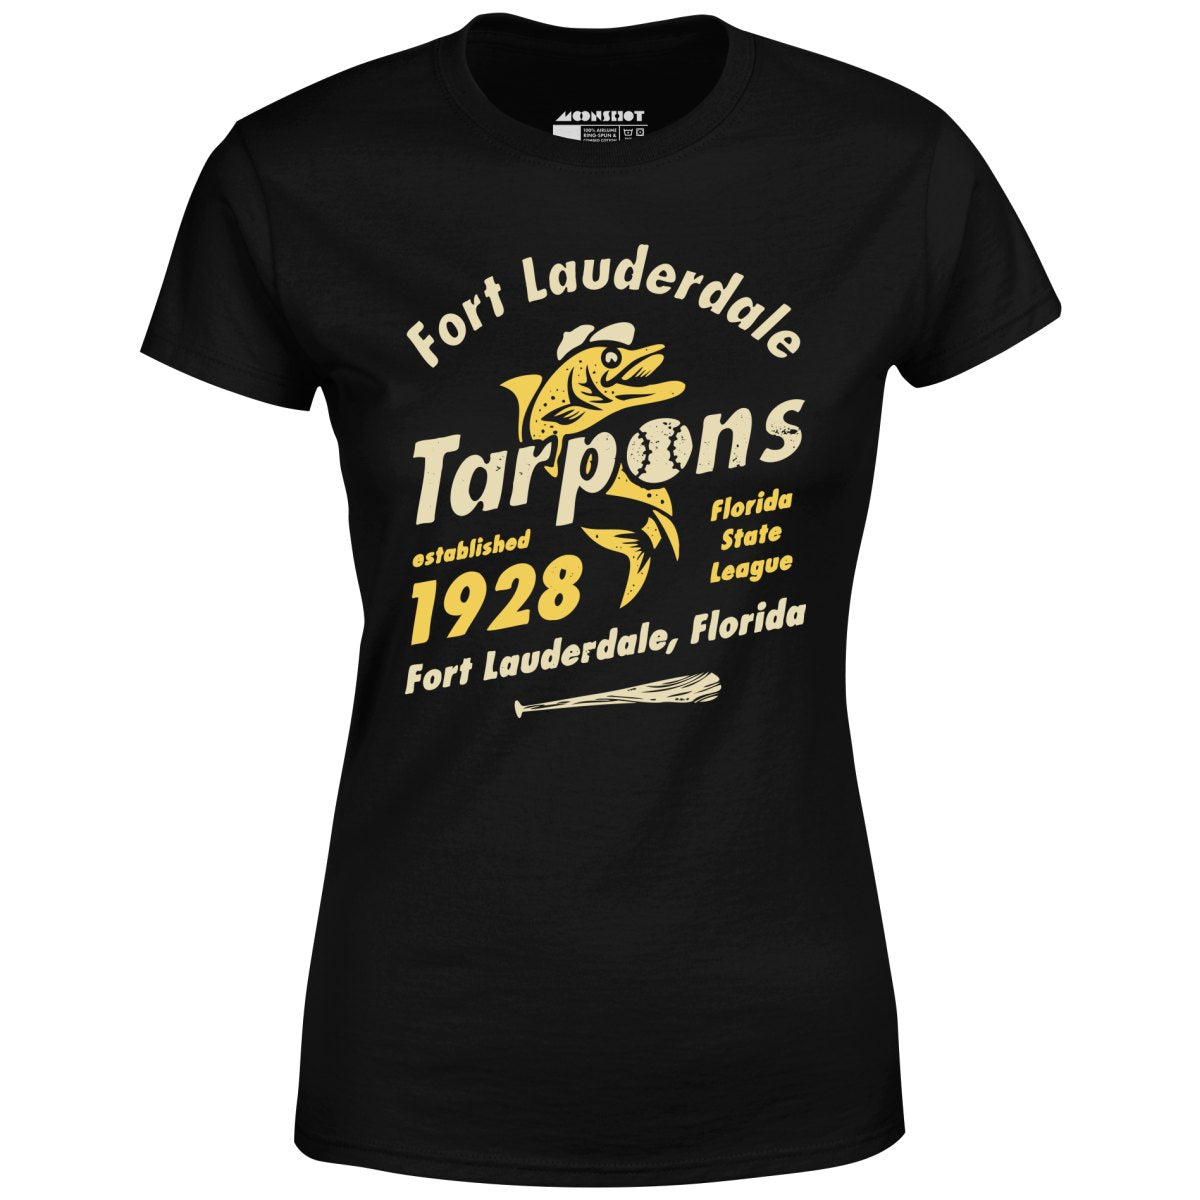 Fort Lauderdale Tarpons - Florida - Vintage Defunct Baseball Teams - Women's T-Shirt